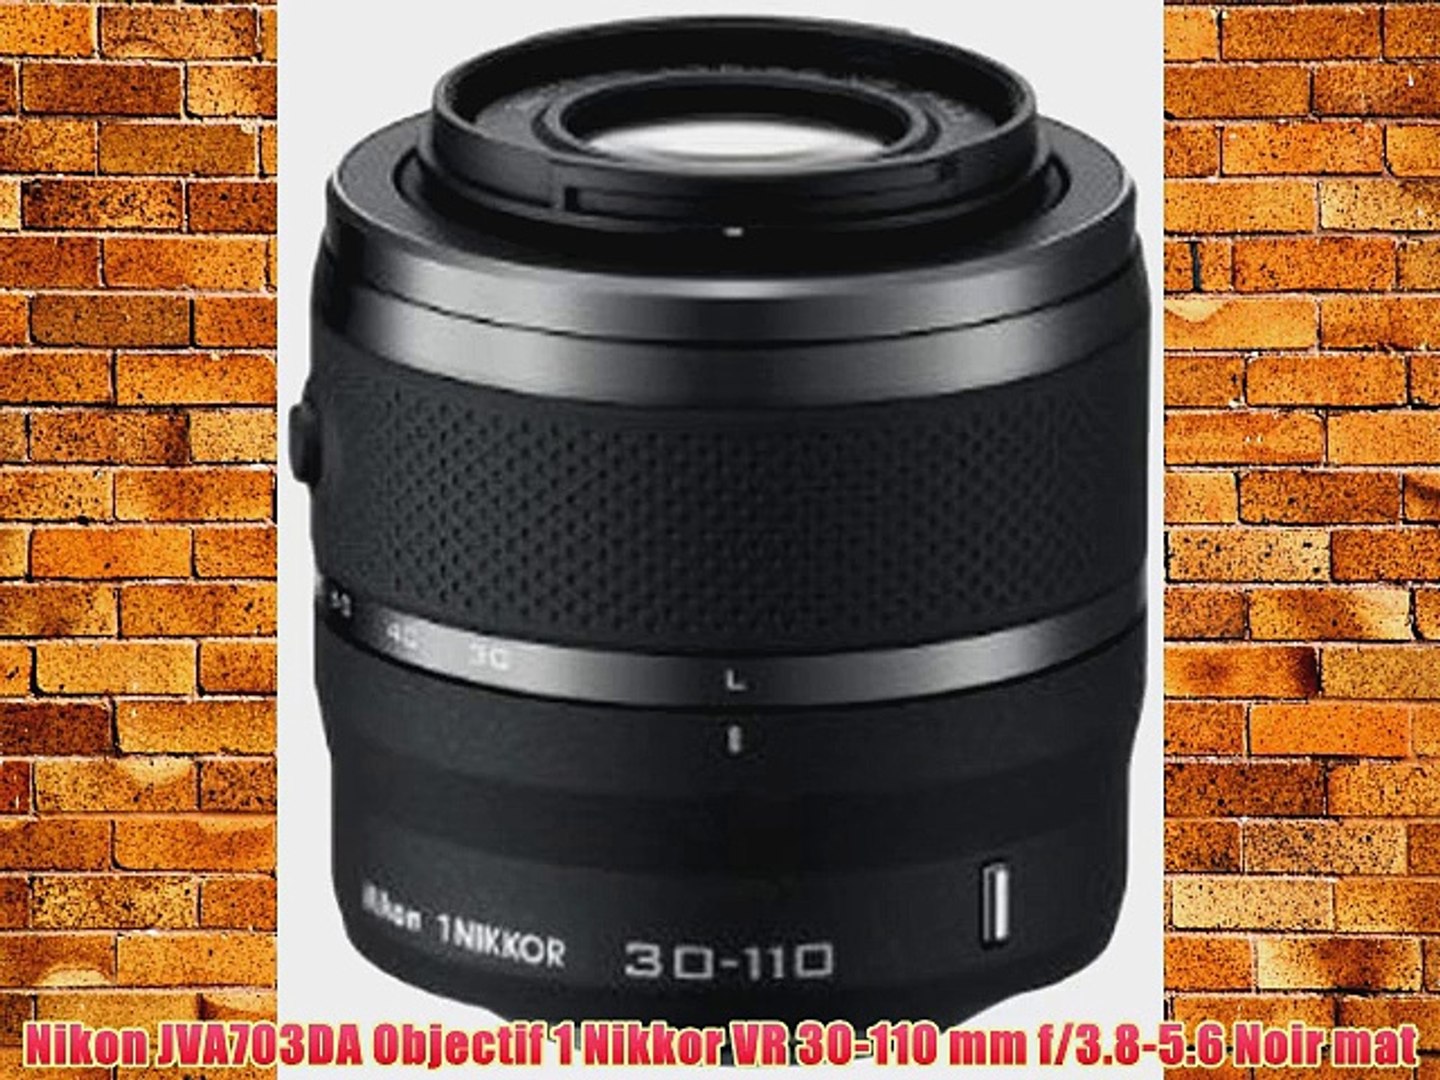 Nikon JVA701DA Objectif 1 Nikkor VR 10-30 mm f//3.5-5.6 Noir mat